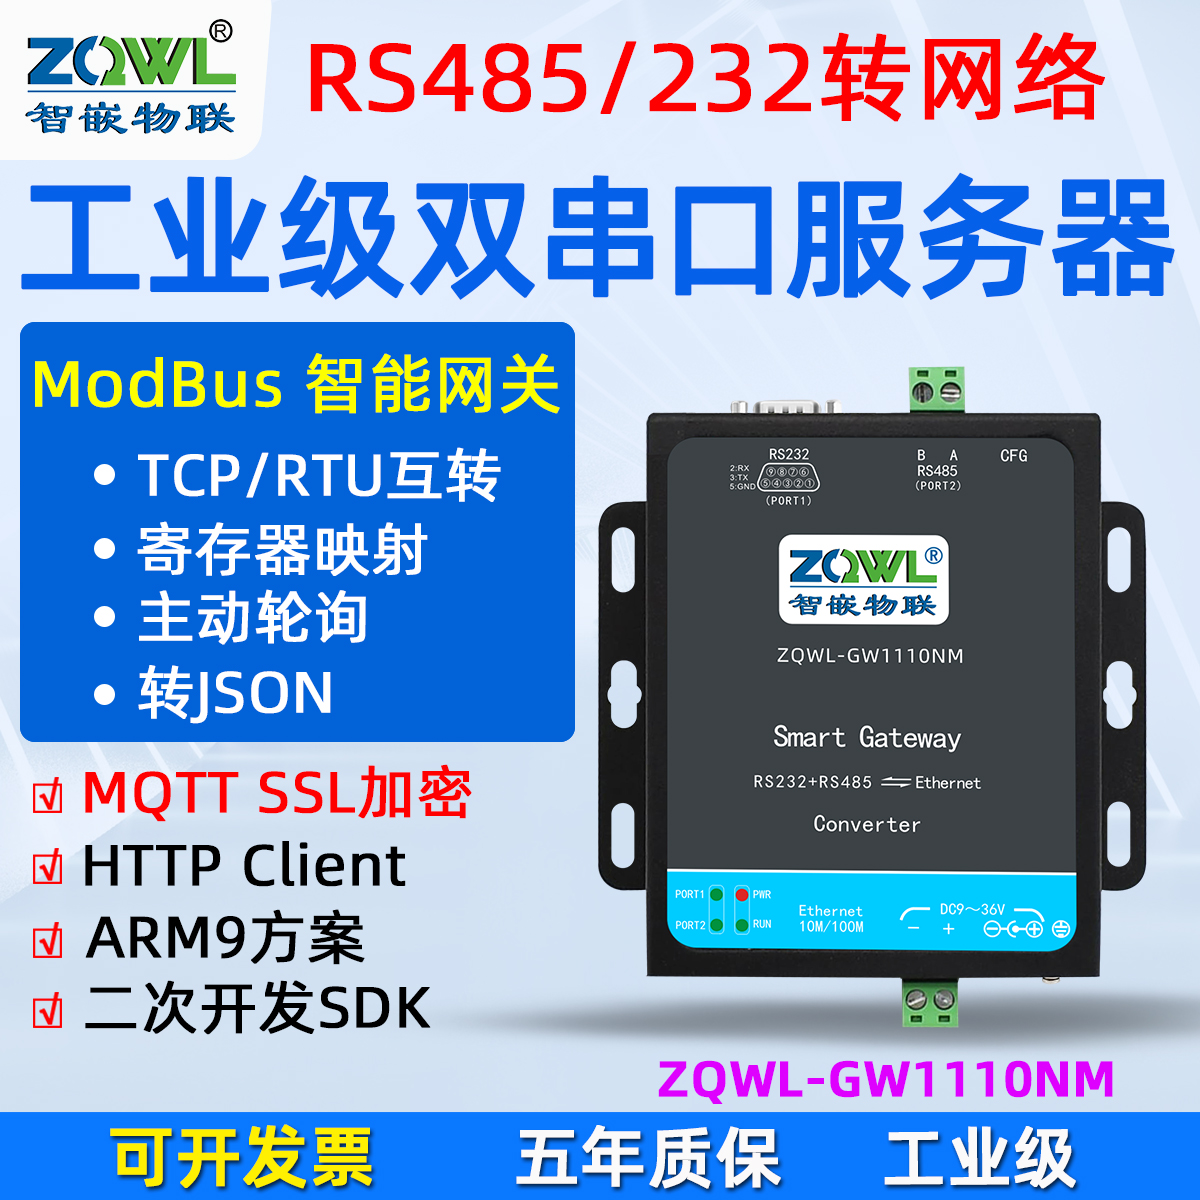 RS485/232串口服务器ZQWL-GW1110NM